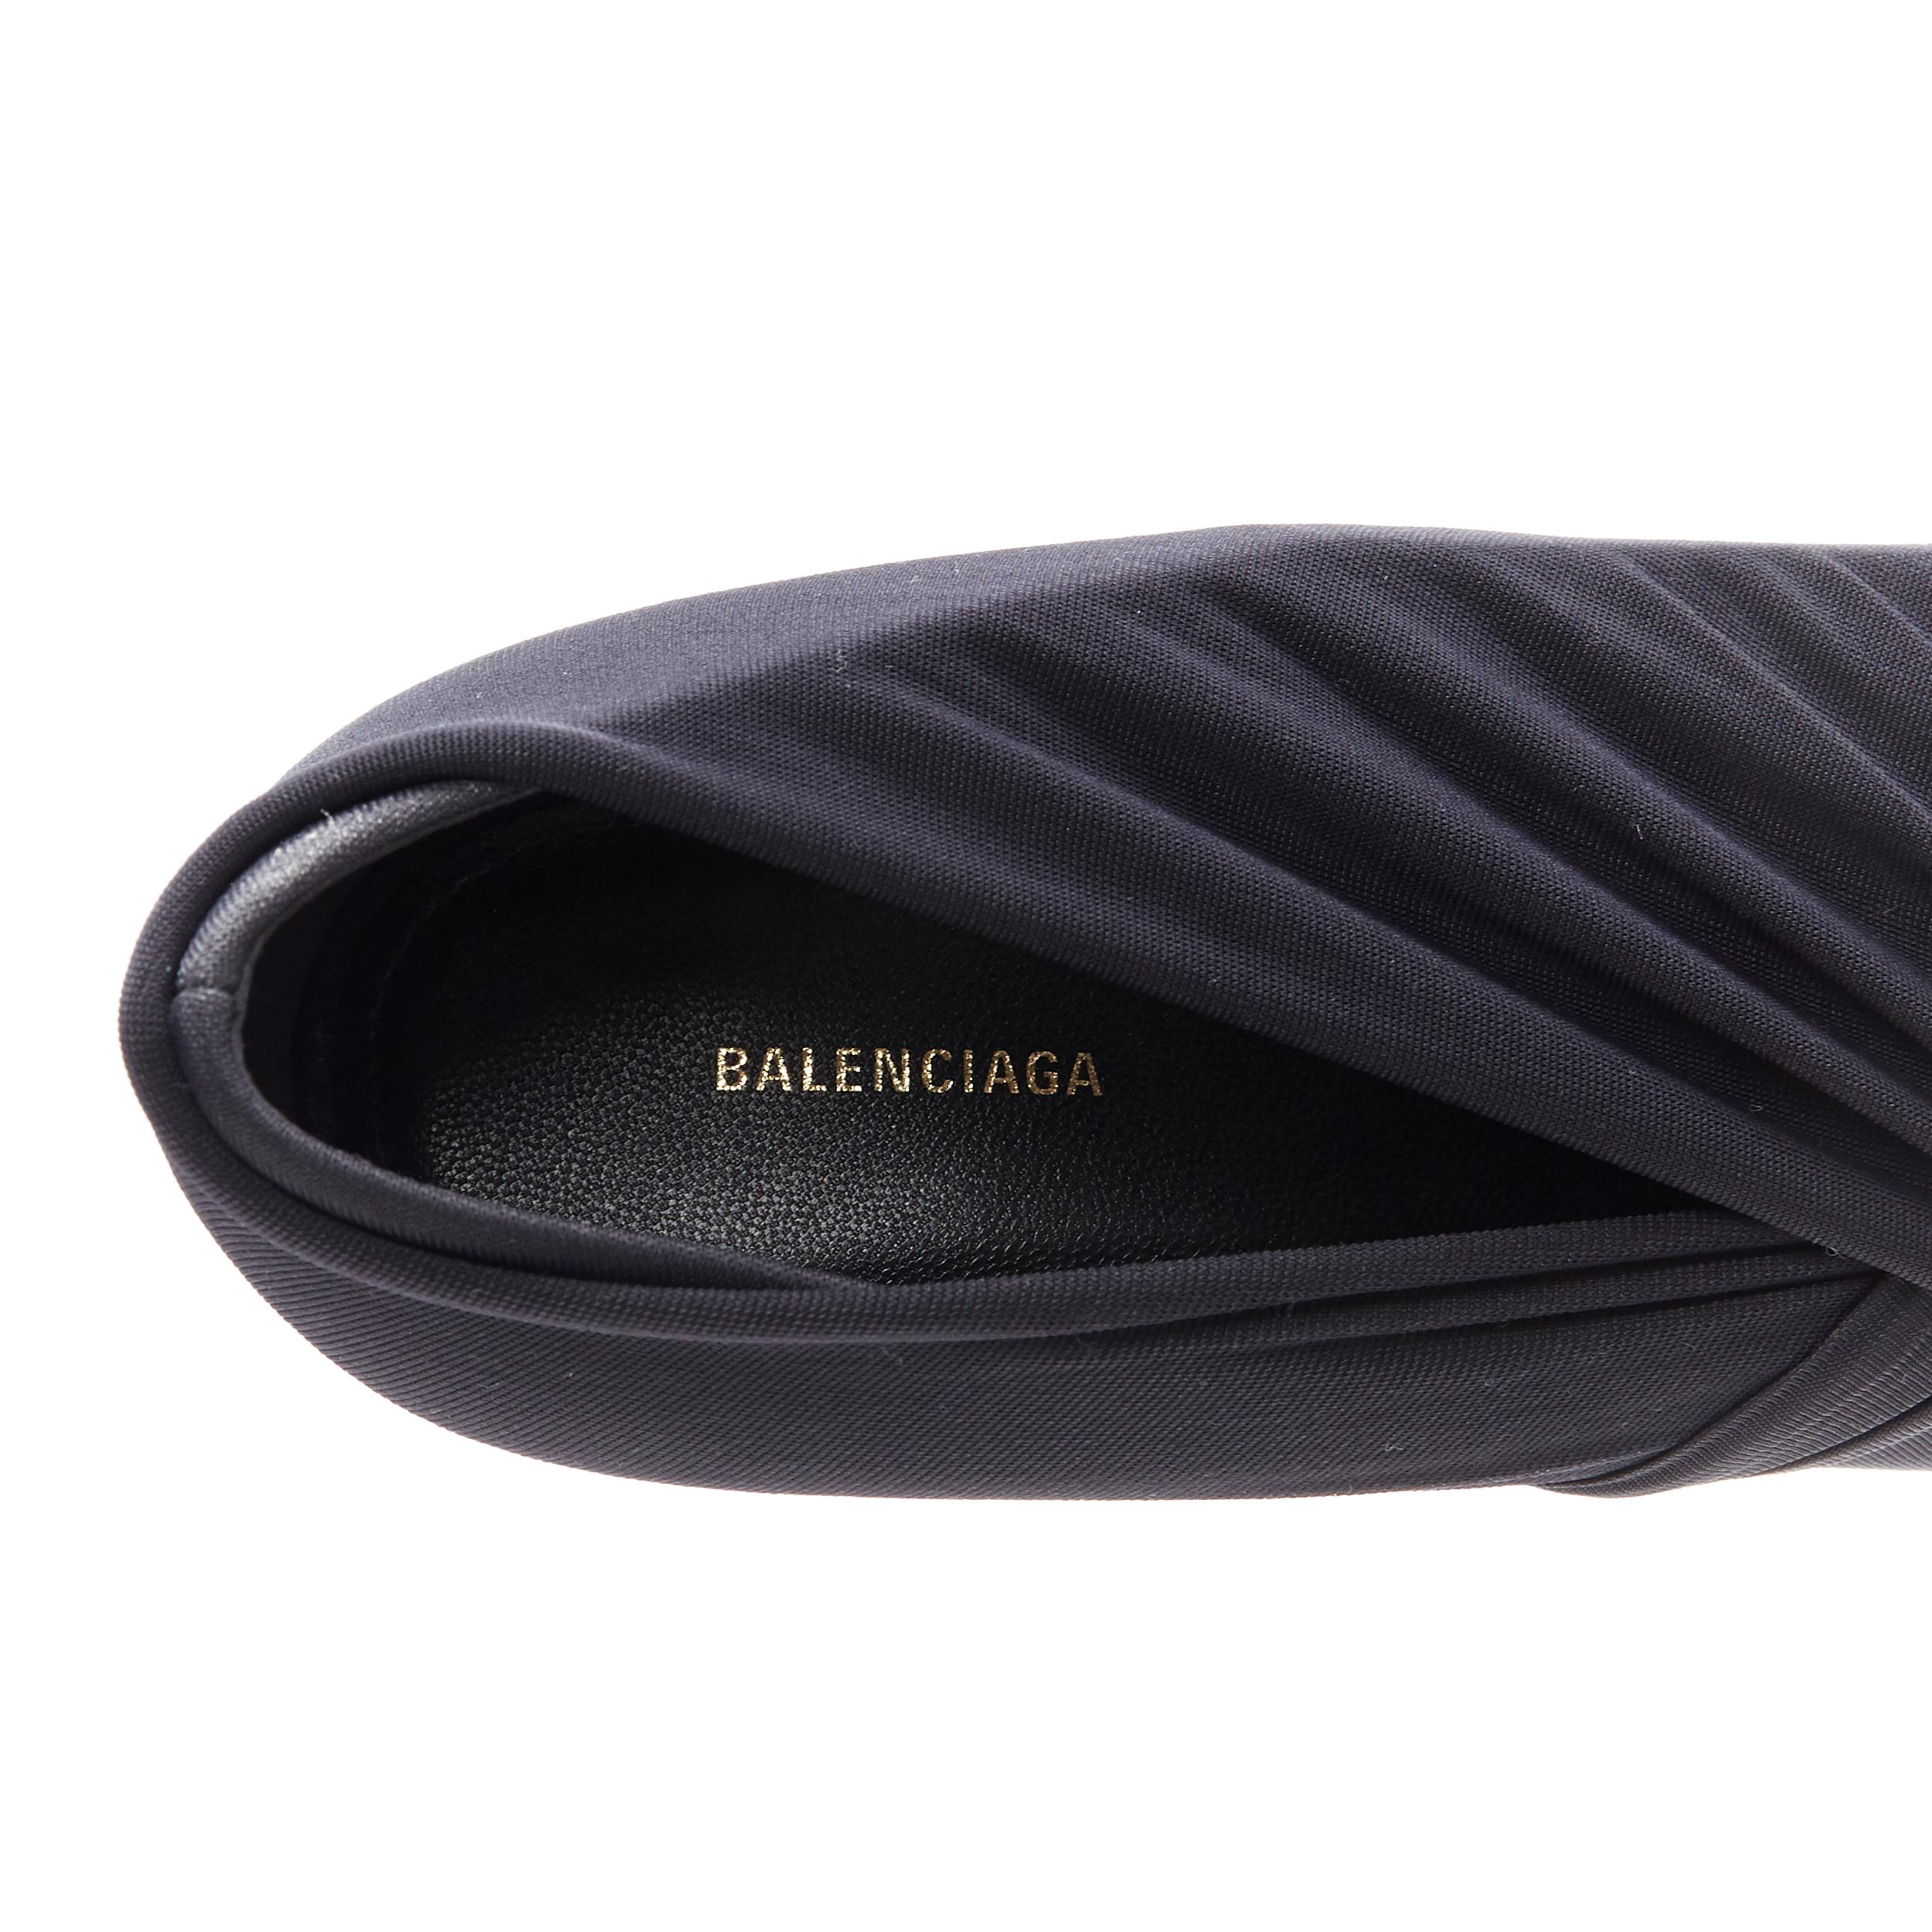 new BALENCIAGA Knife Drape Knit black stretch jersey wrapped high heel pump EU37 2